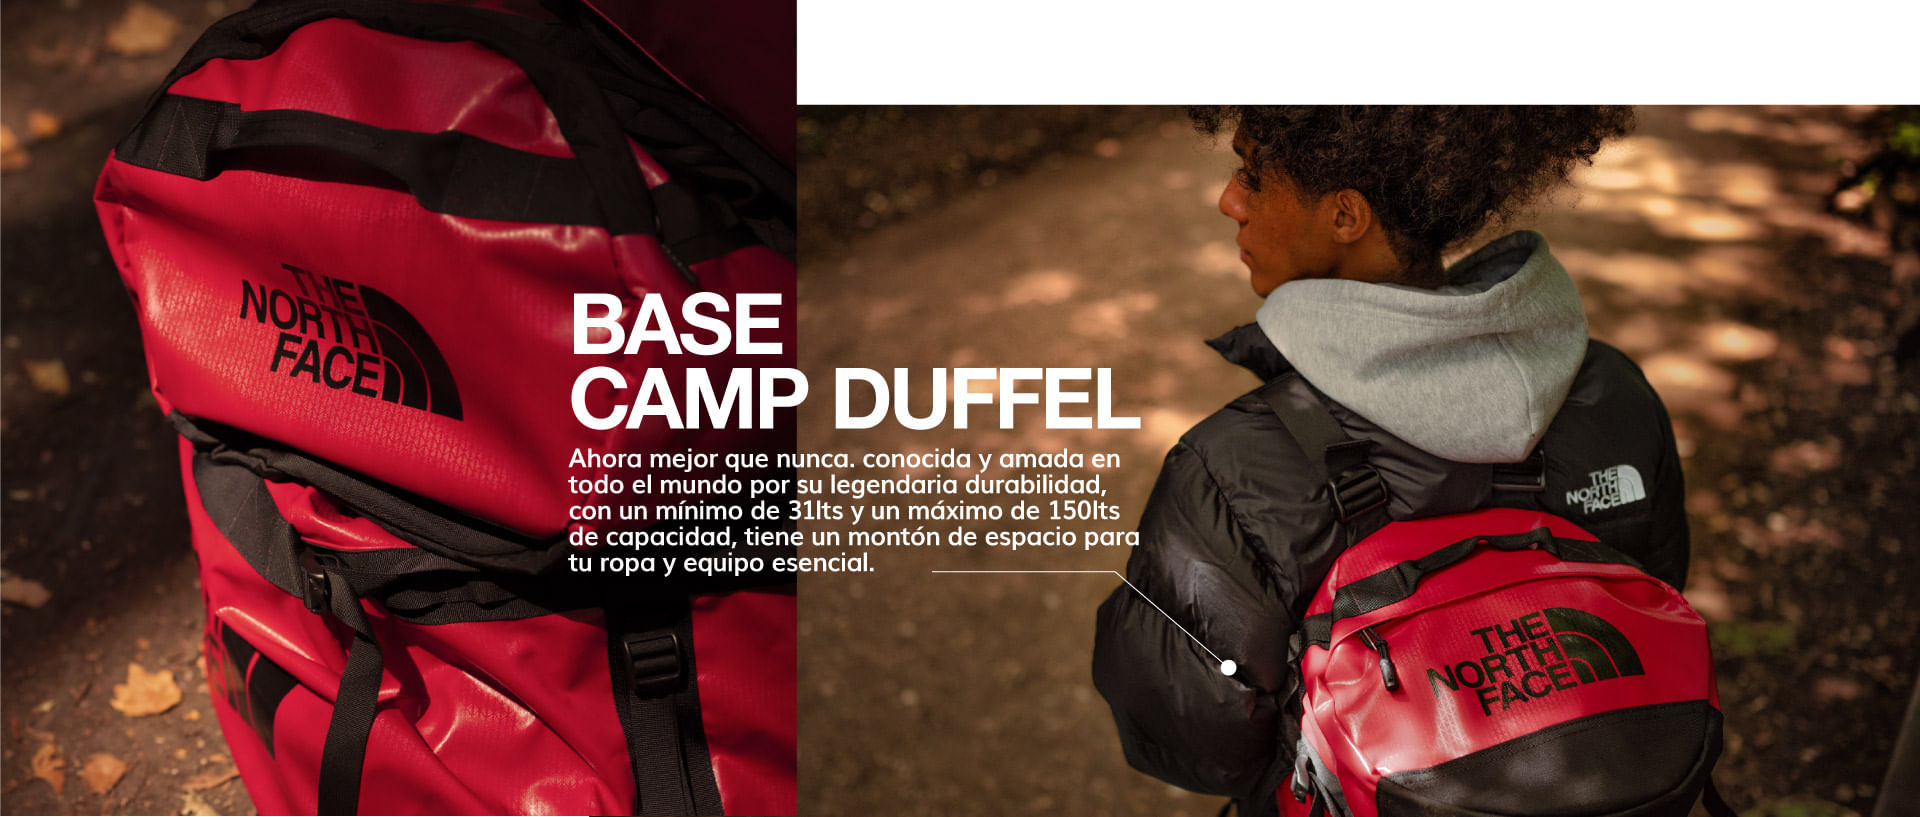 Base camp duffel